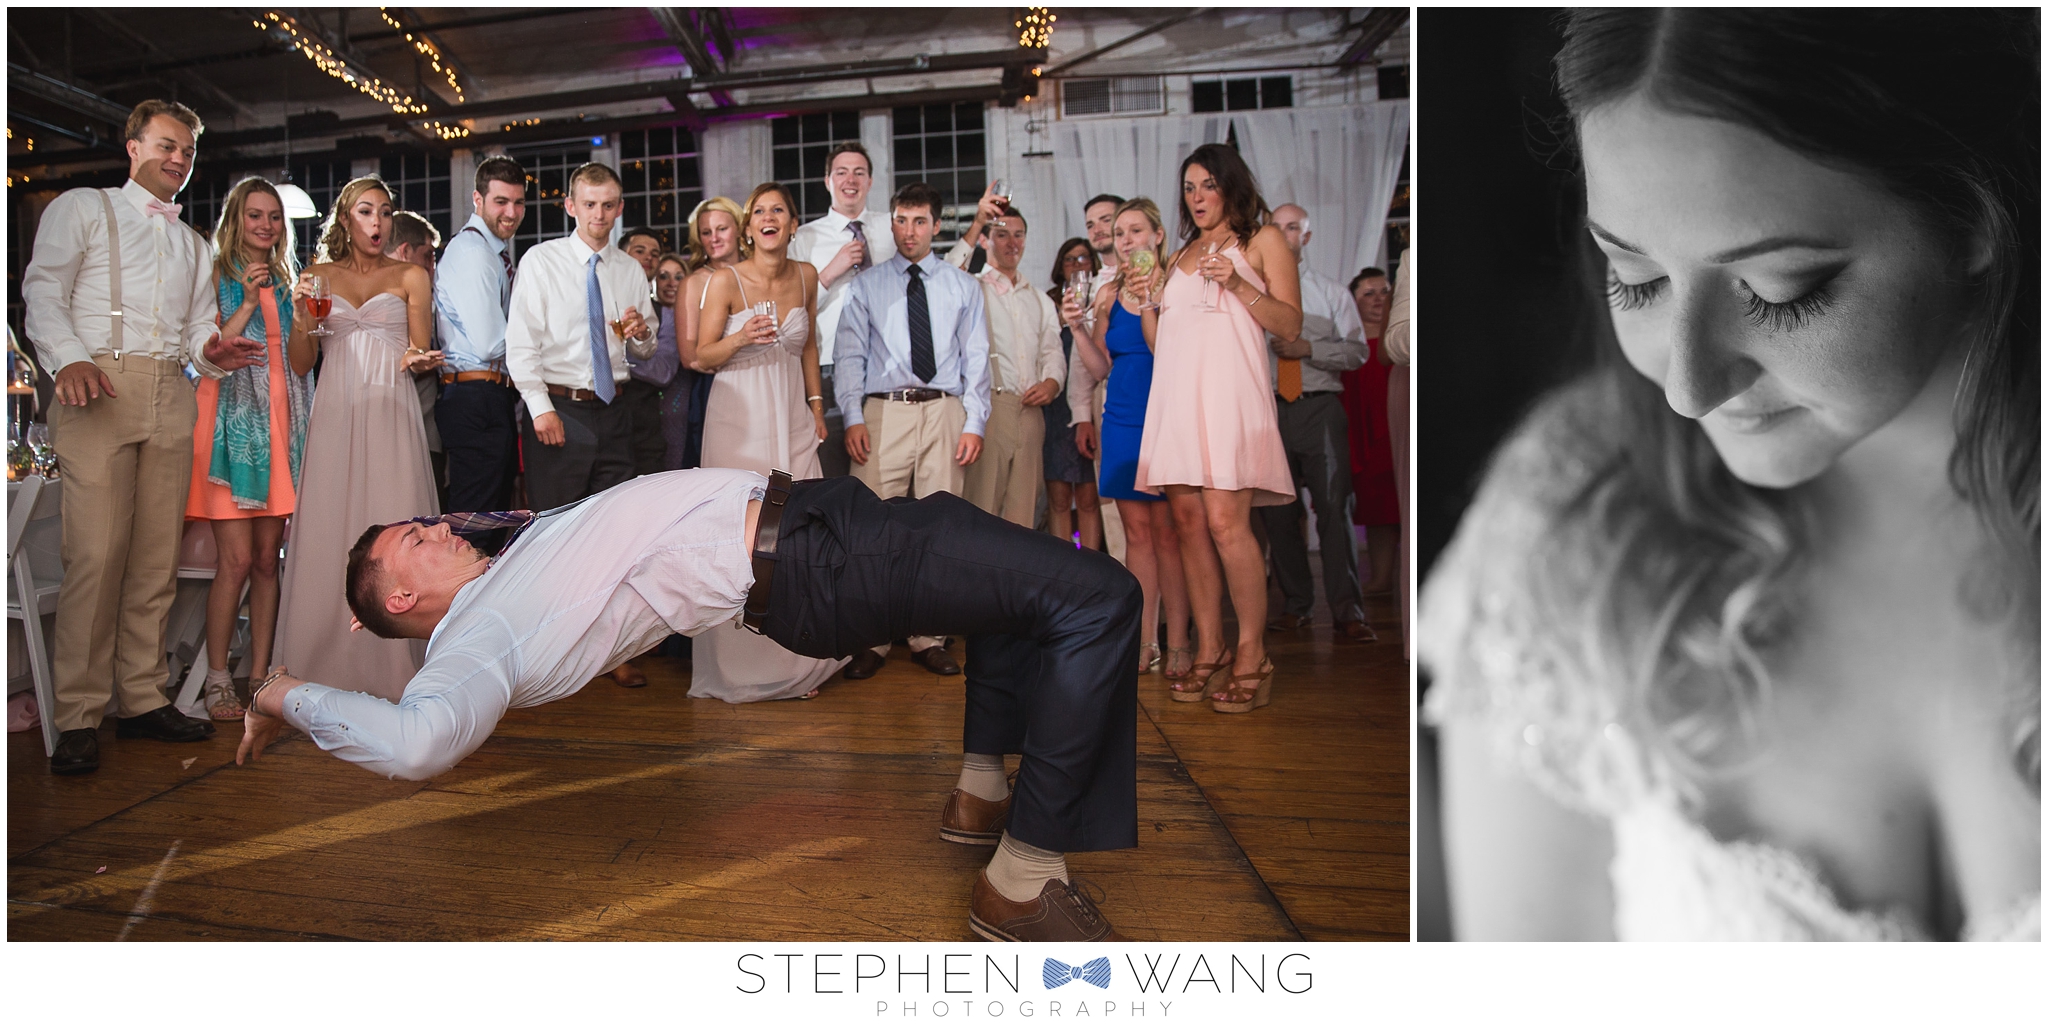 Stephen Wang Photography Wedding Photographer Connecticut CT-12-24_0012.jpg